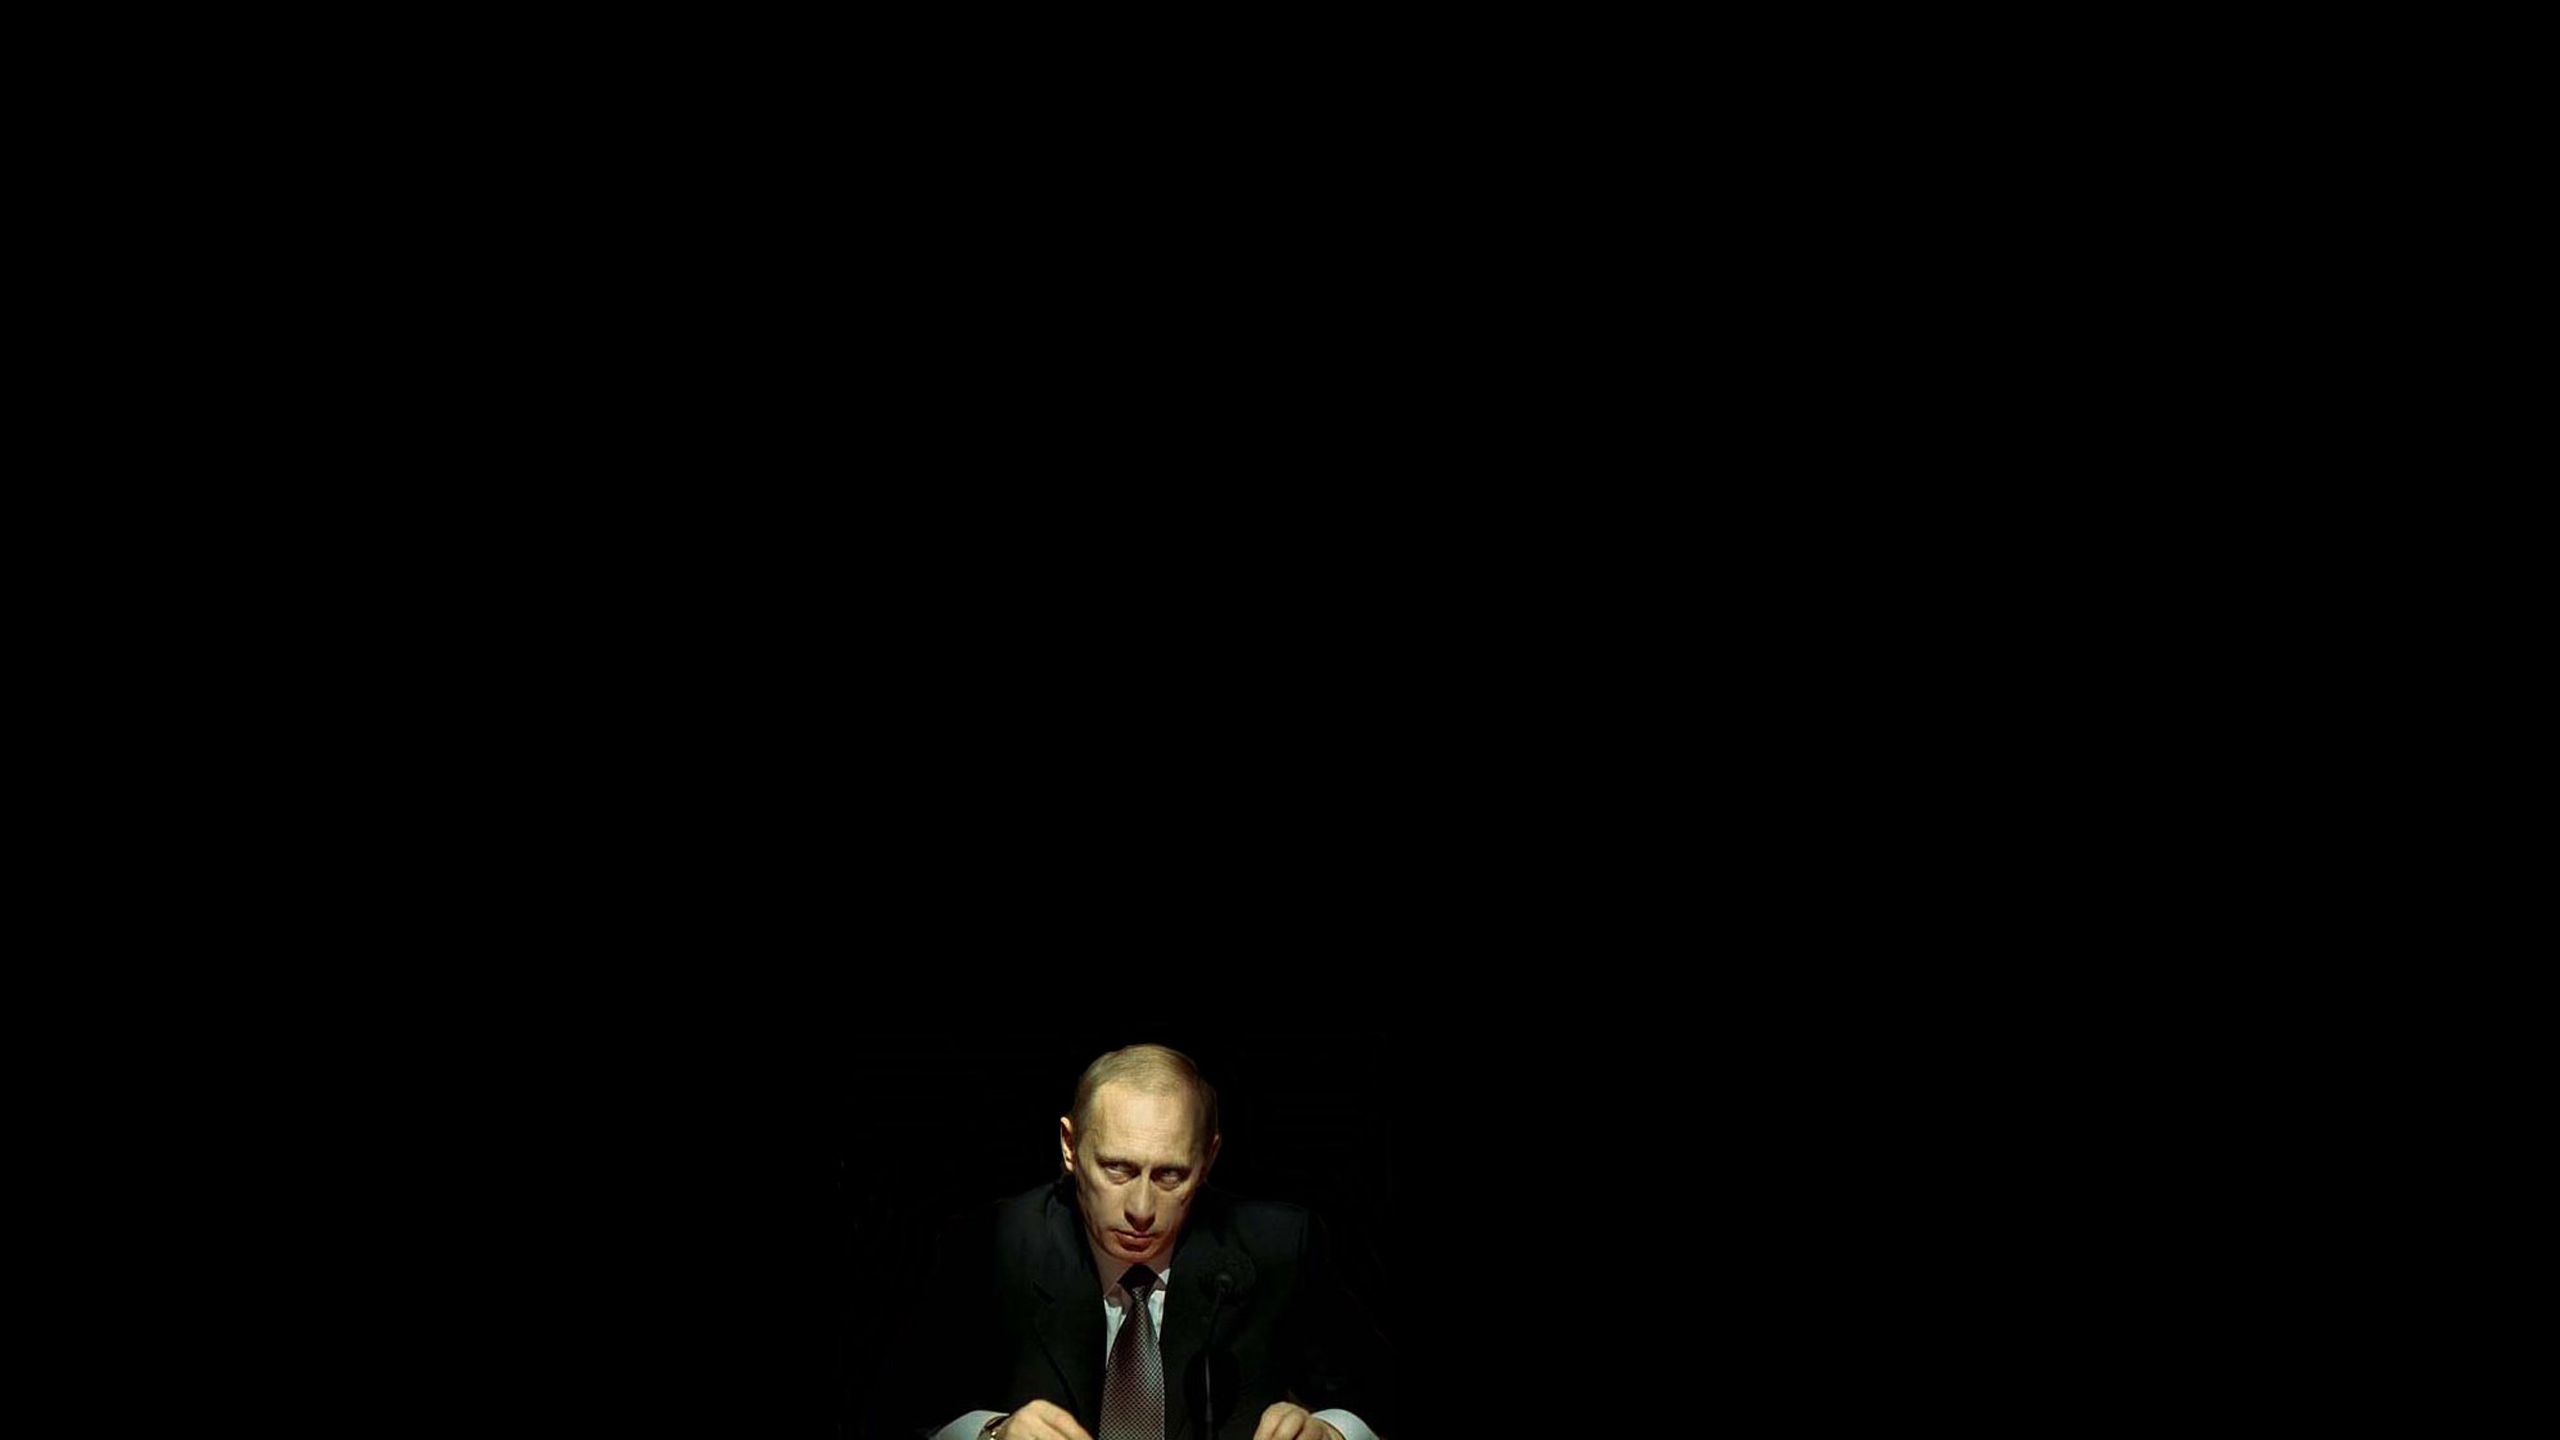 Vladimir Putin Category General This Desktop Wallpaper Has Been